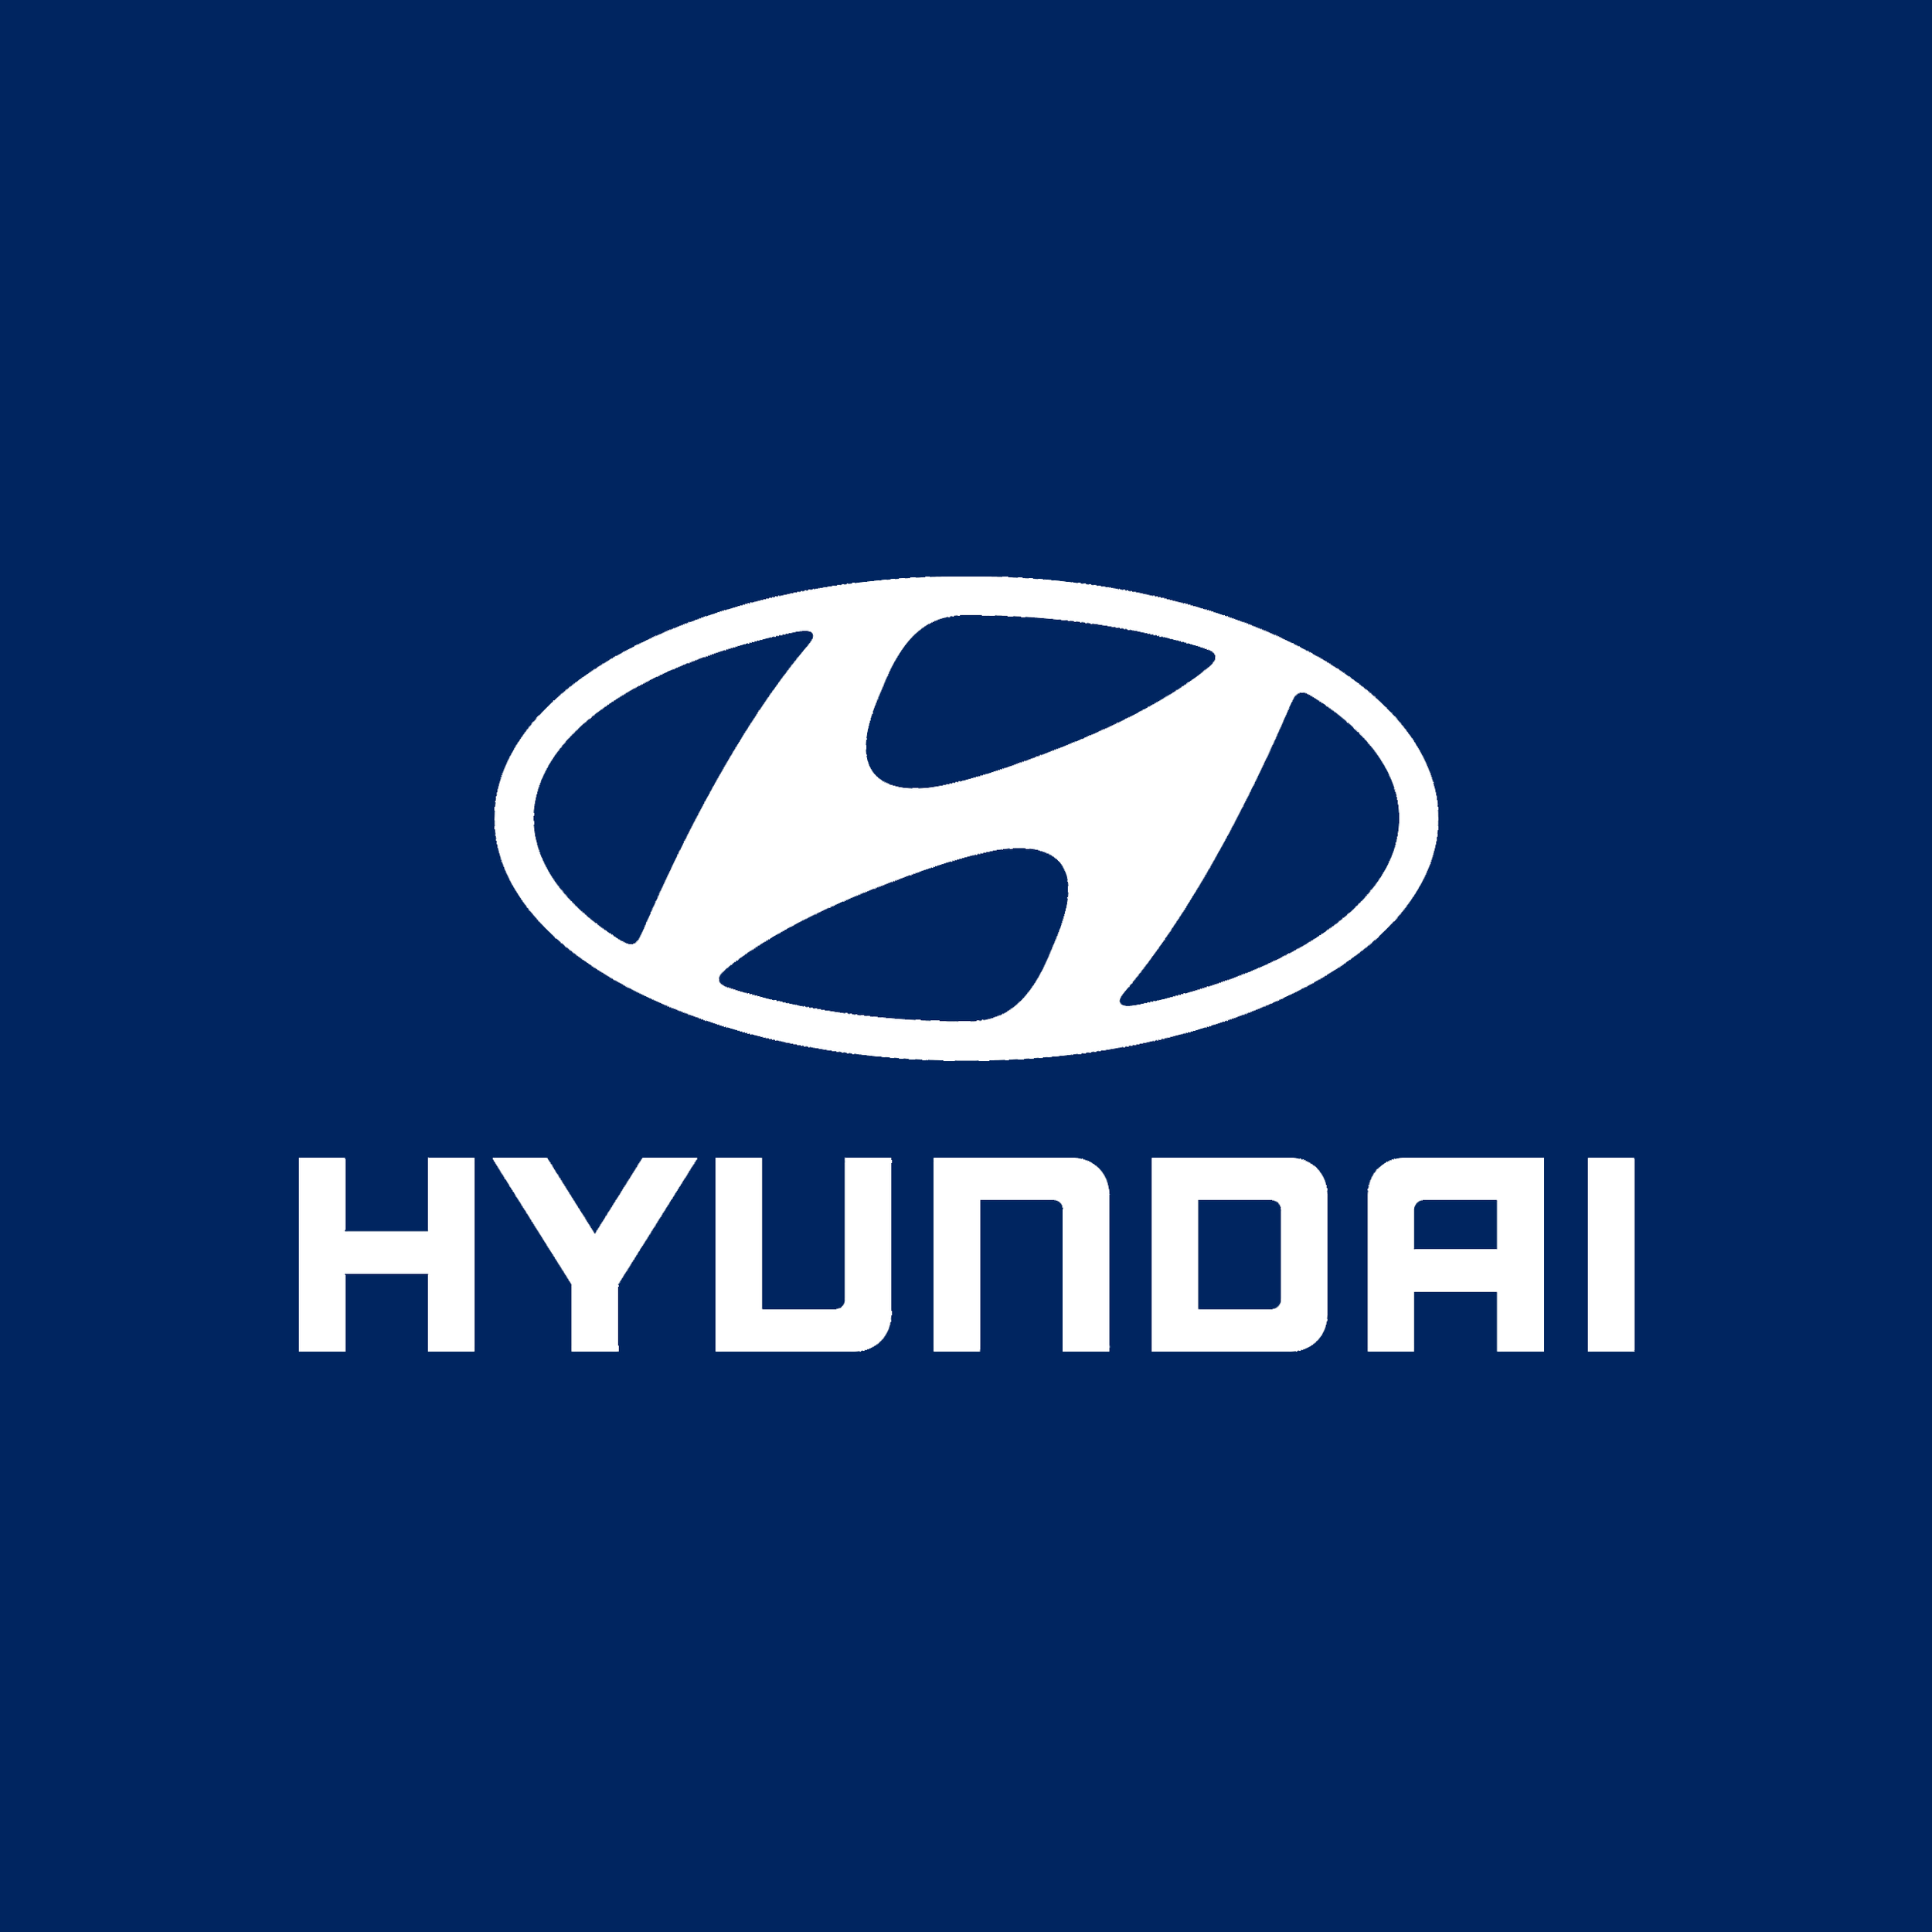 Hyundai-symbol-blue-2560x1440.png